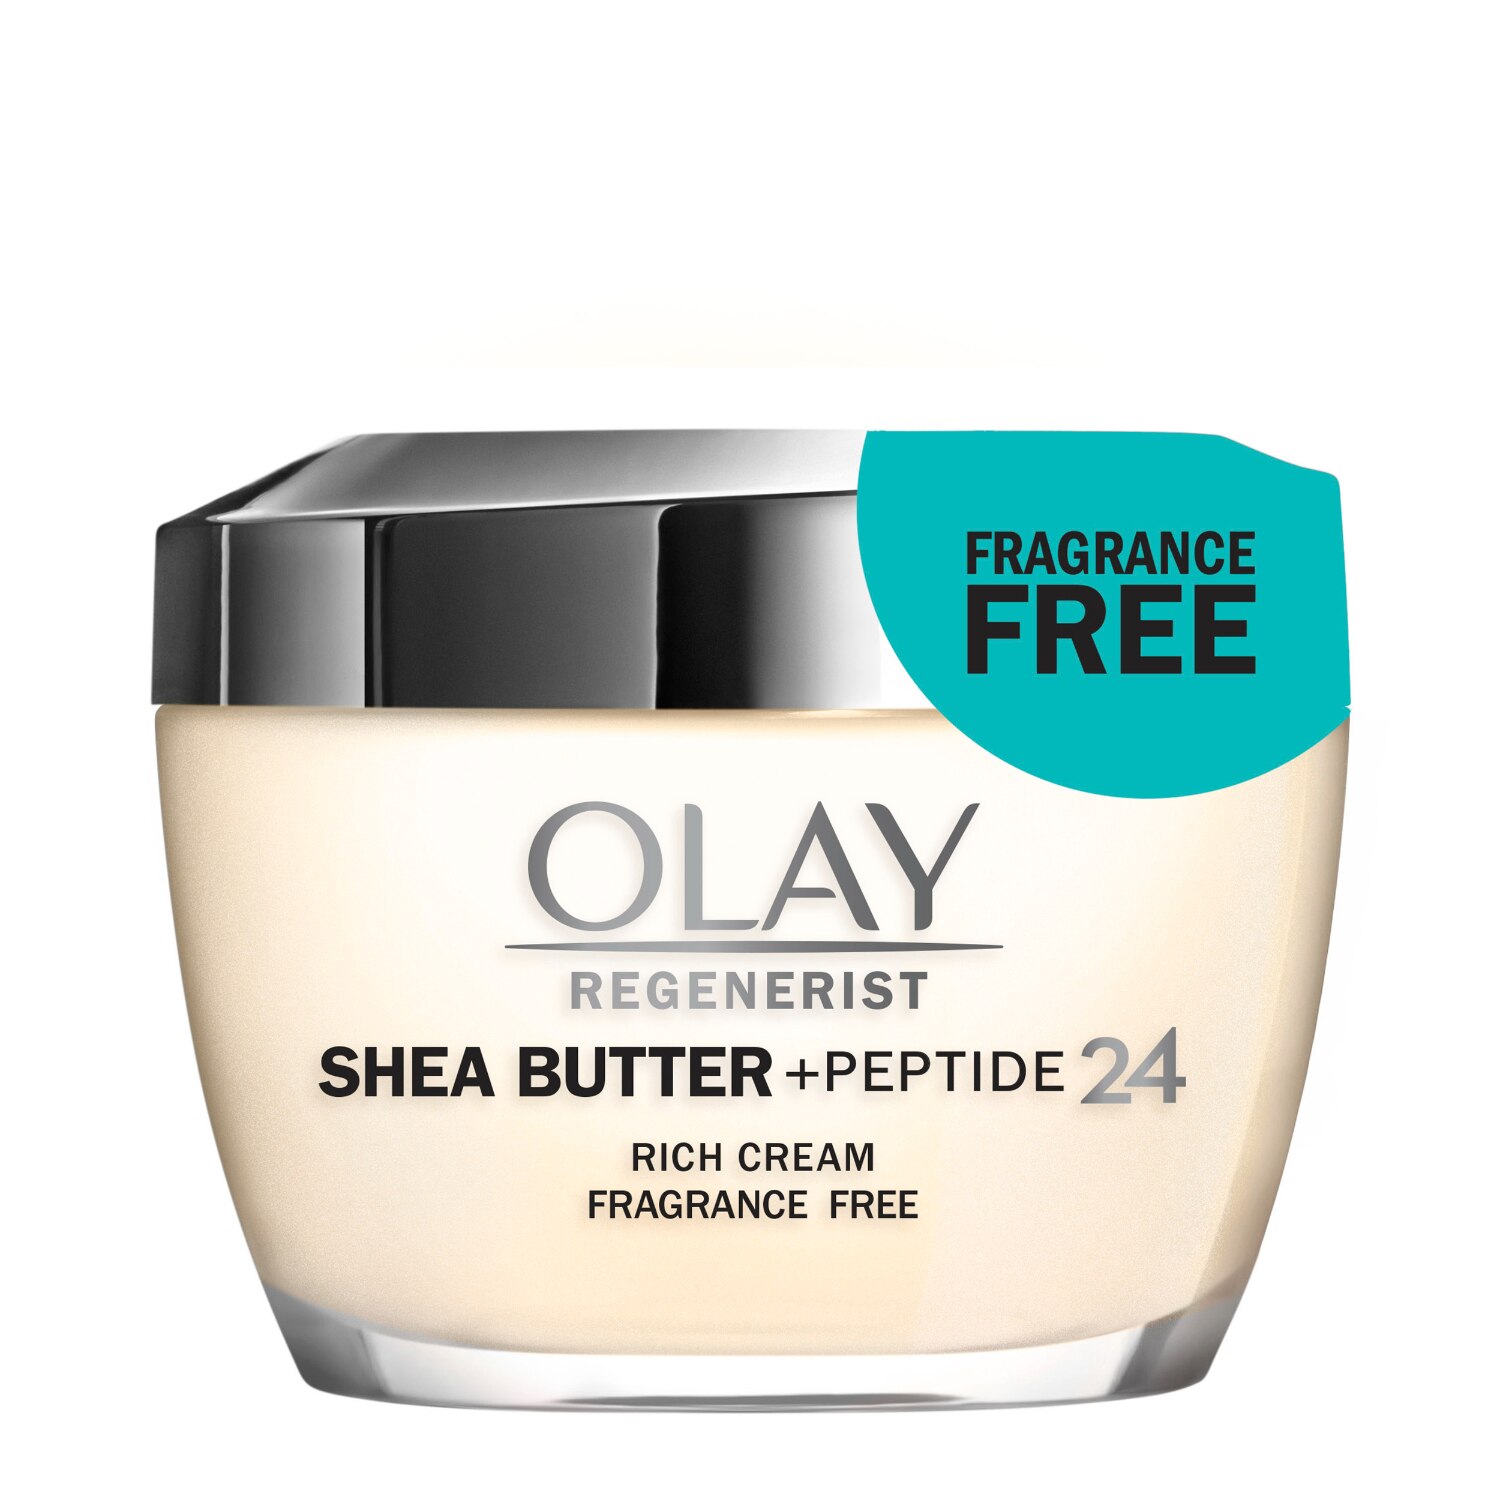 Olay Regenerist Shea Butter + Peptide 24 Face Moisturizer, Fragrance-Free, 1.7 OZ